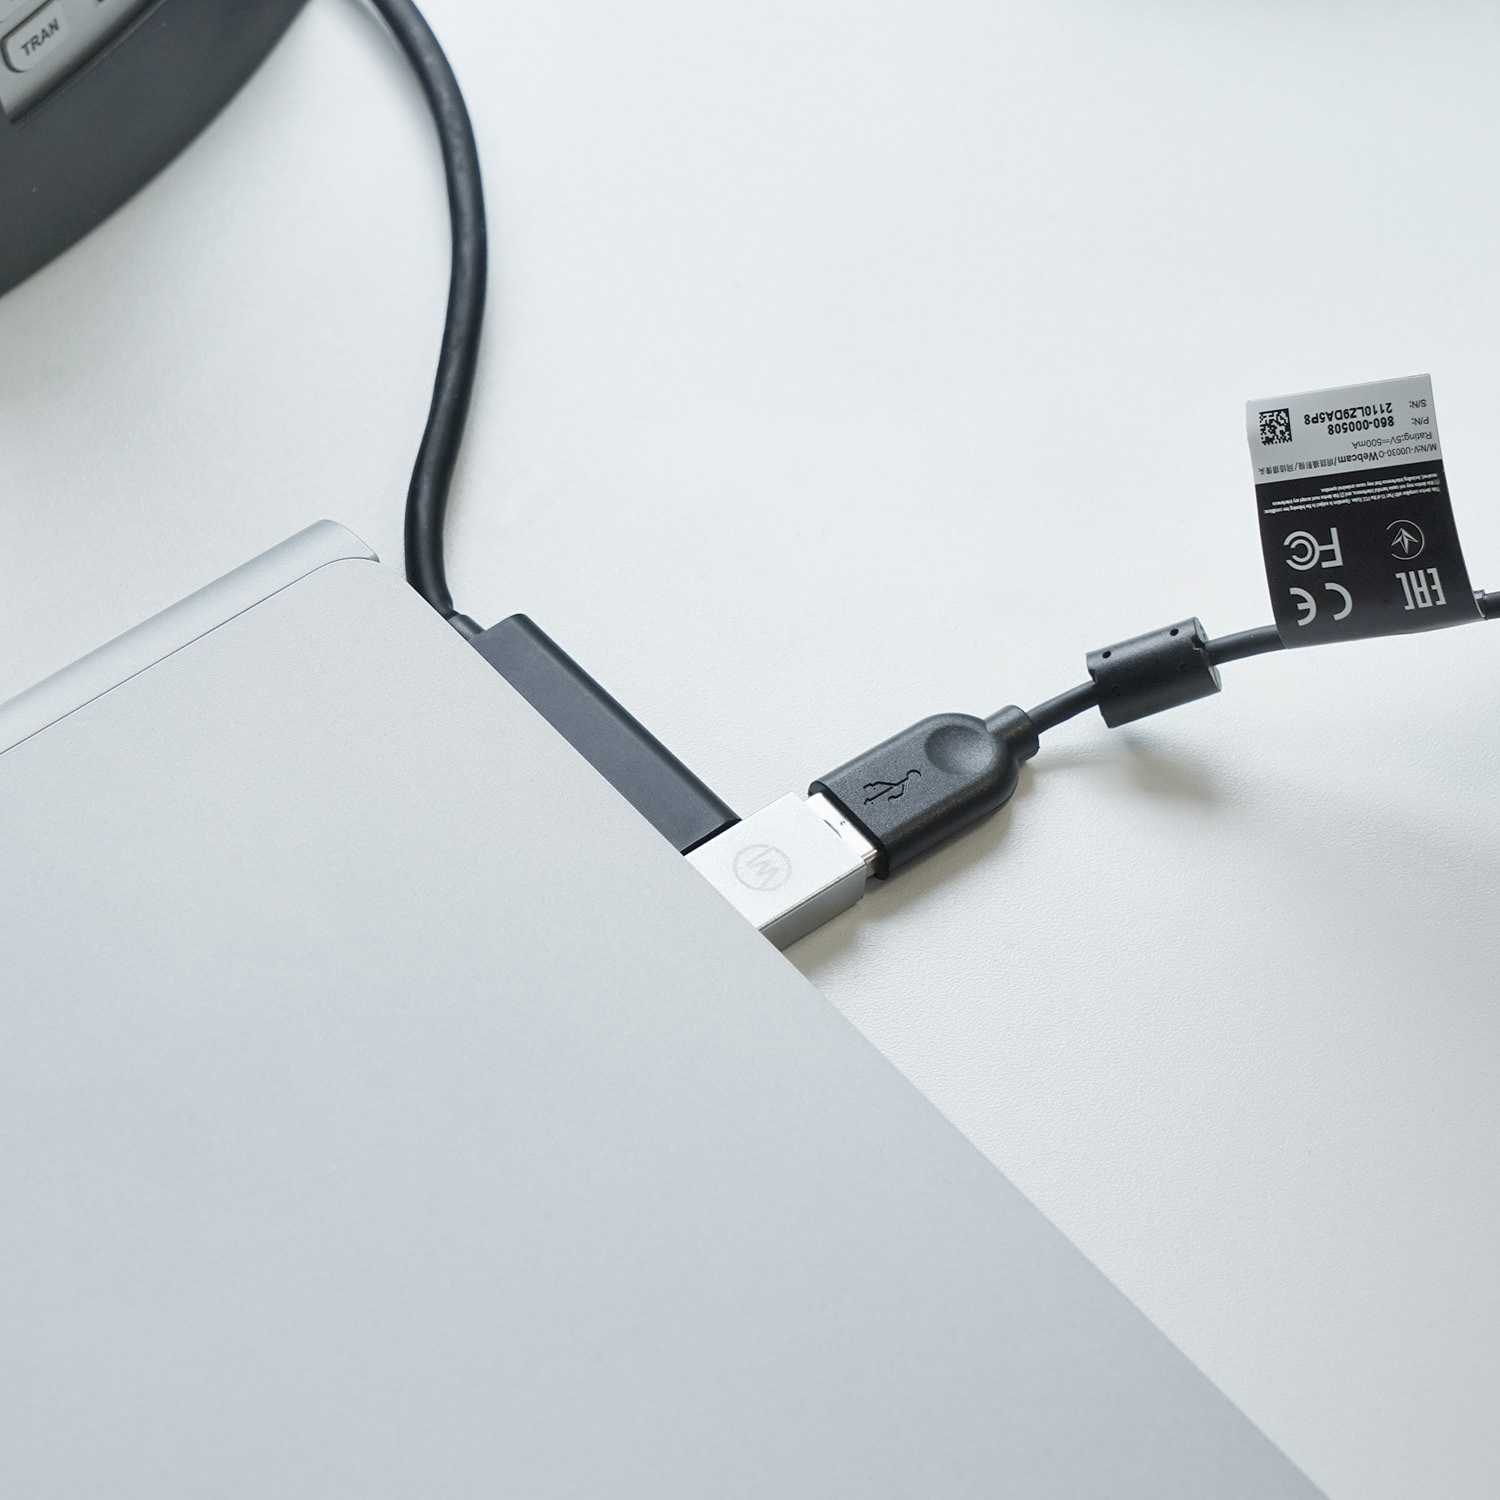 USB und Teaisiy, Jelly-Comb, Adapter Nulaxy WICKED mit Laptop HD CHILI Logitech, Adapter für Webcams Universal für USB-C